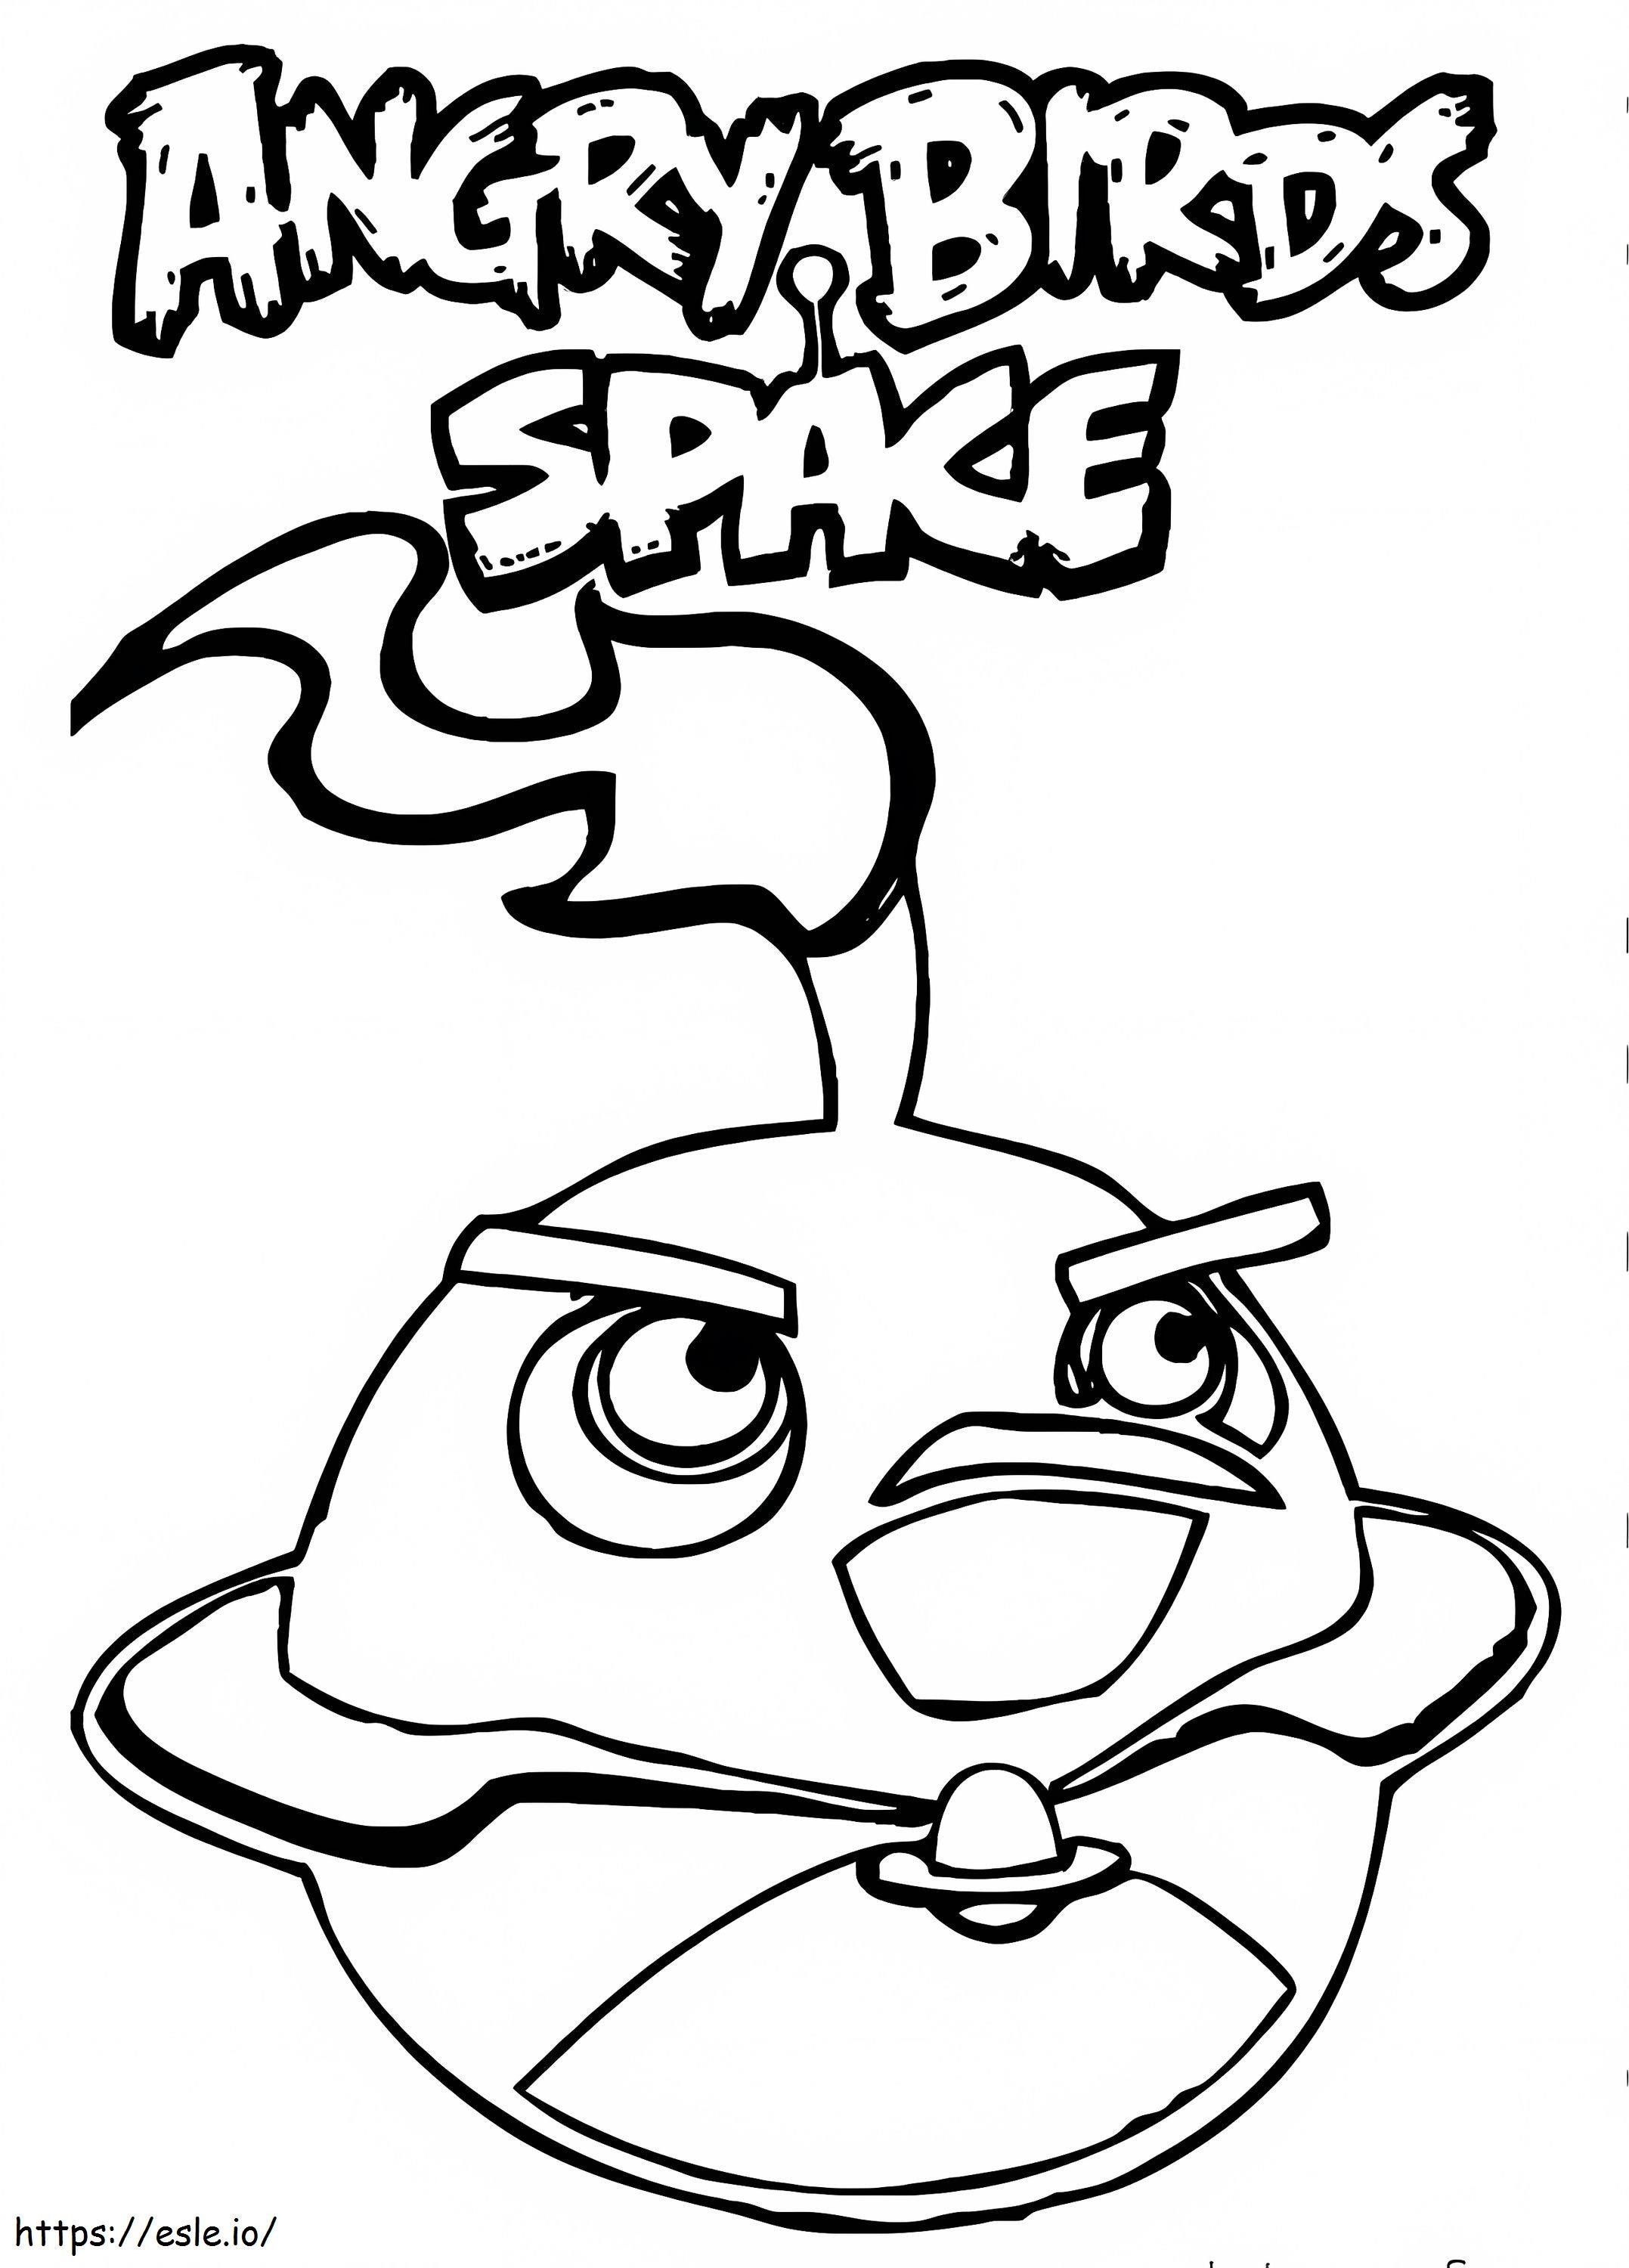 Angry Birds Space kifestő